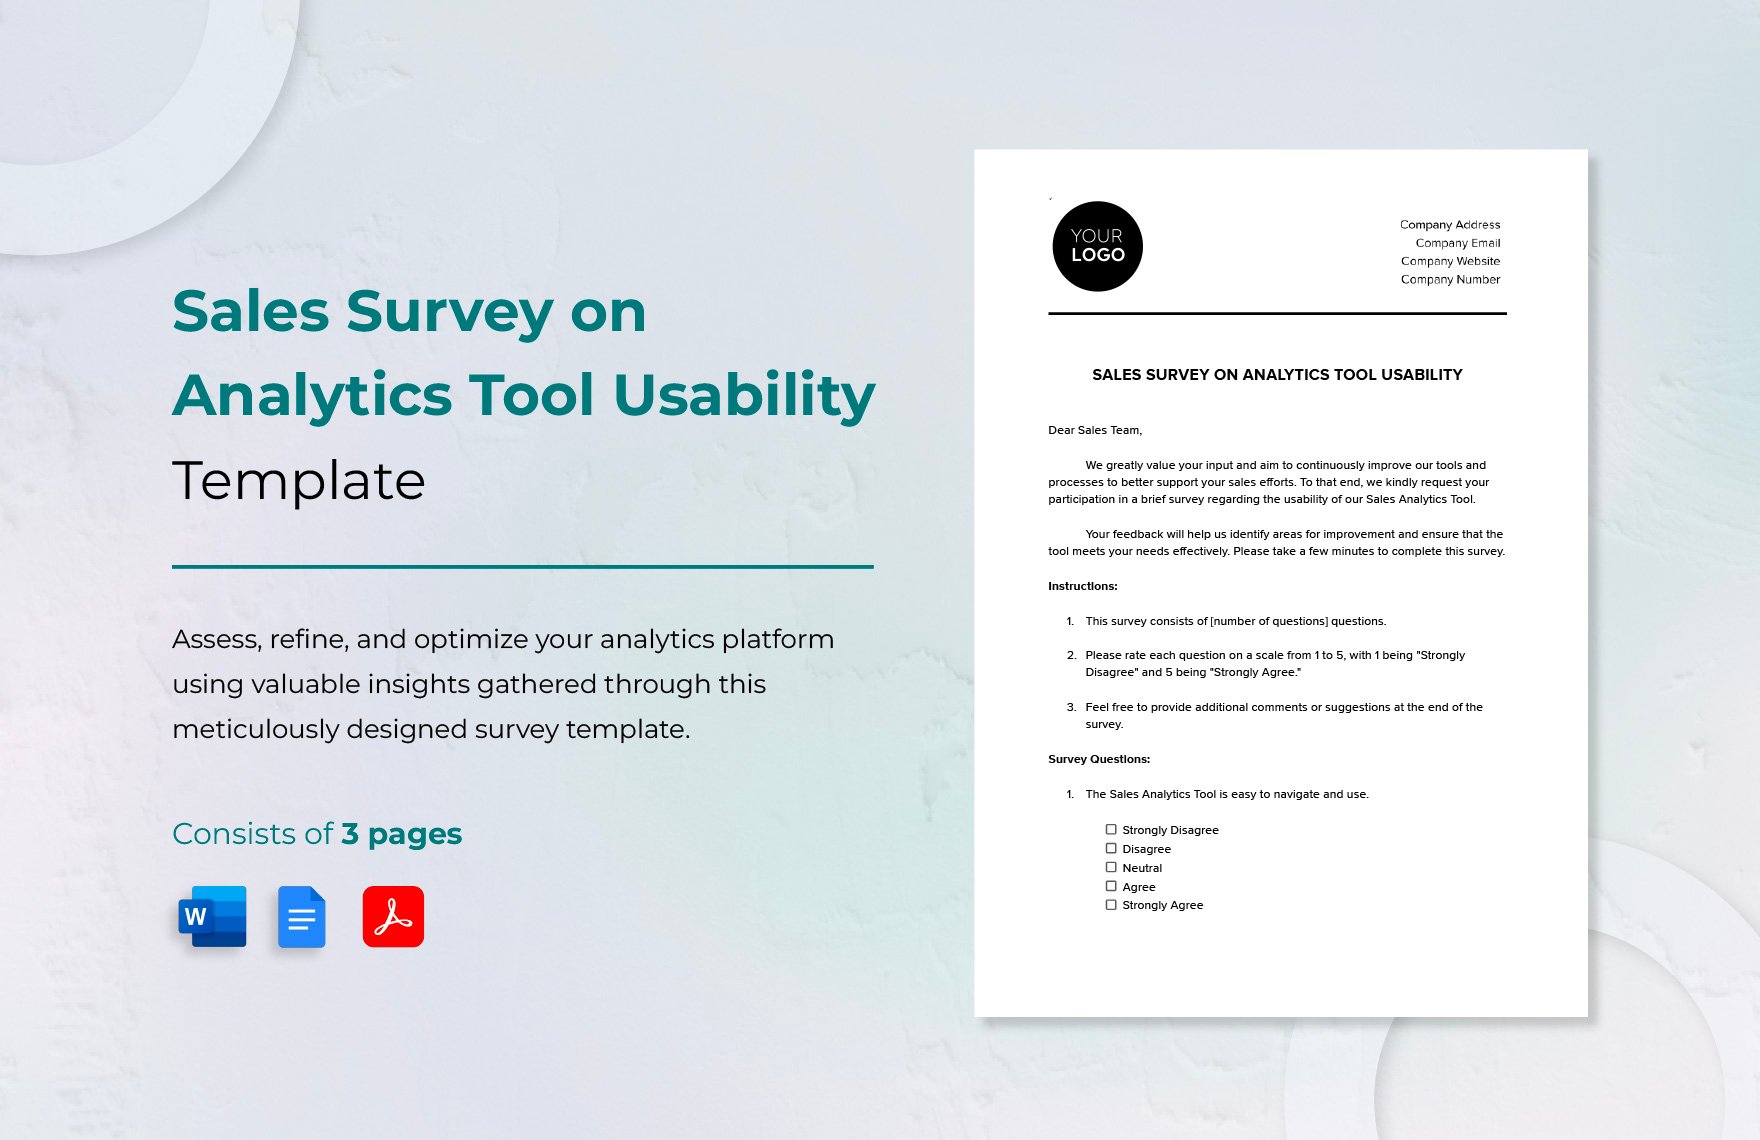 Sales Survey on Analytics Tool Usability Template